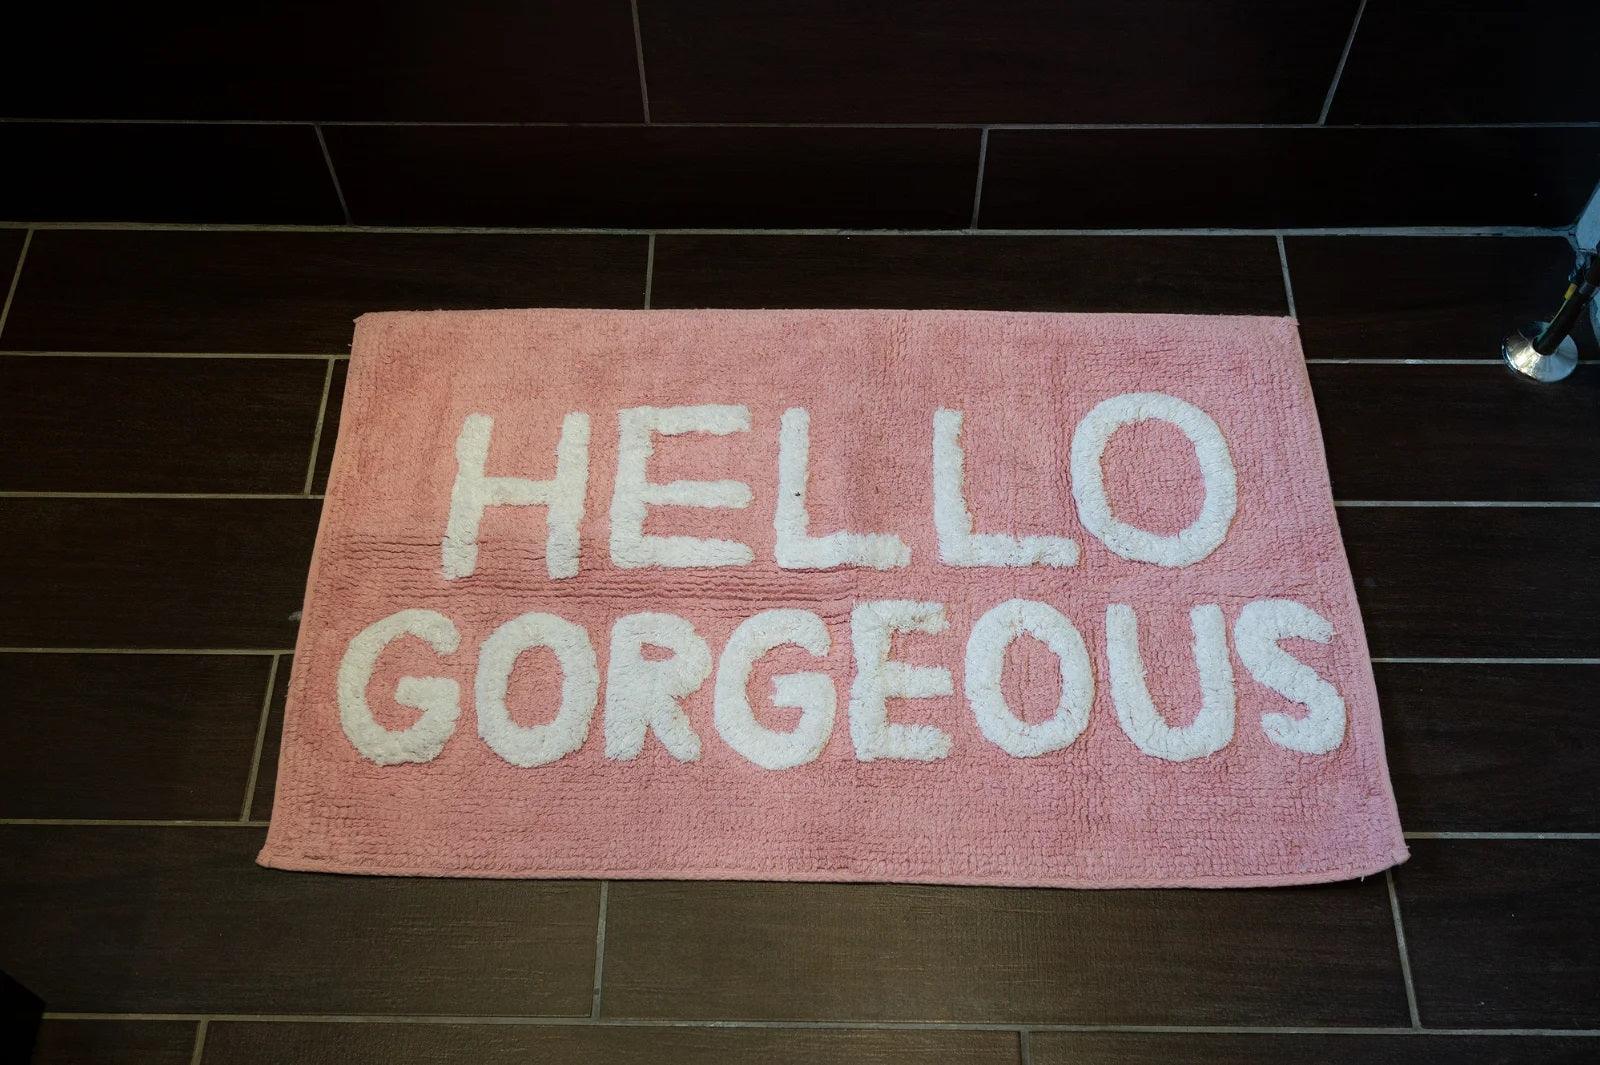 Pink Fabric Bath Mat Hello Gorgeous – Shades 4 Seasons